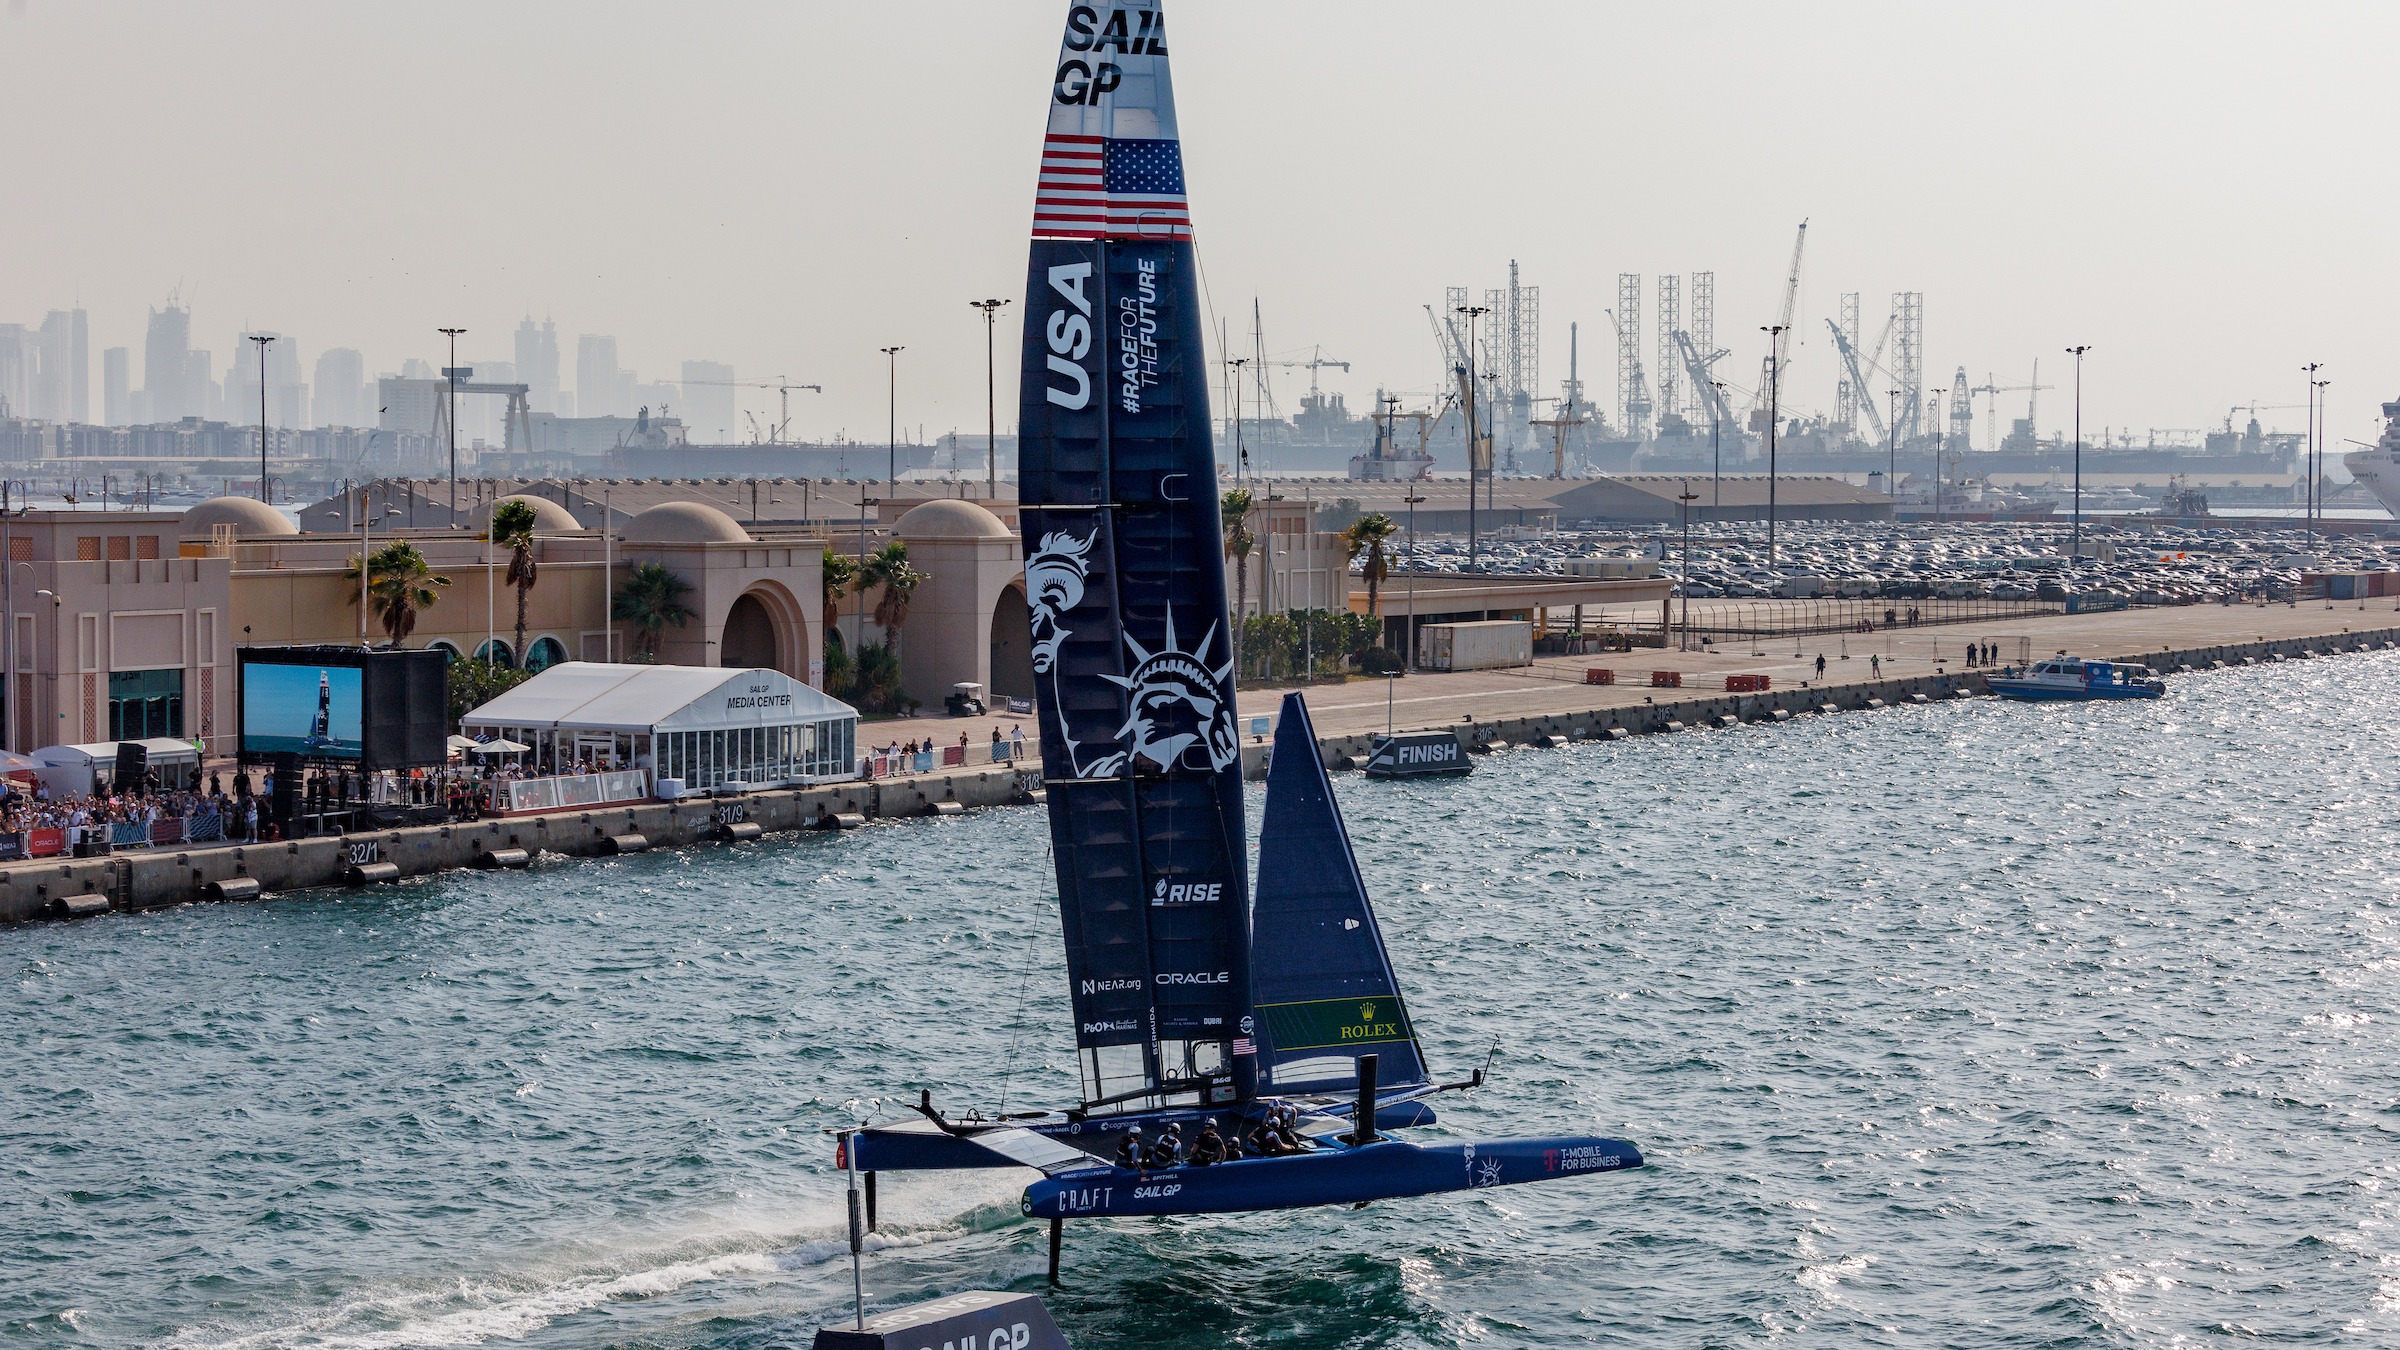 Season 3 // Dubai Sail Grand Prix // United States with Dubai shoreline